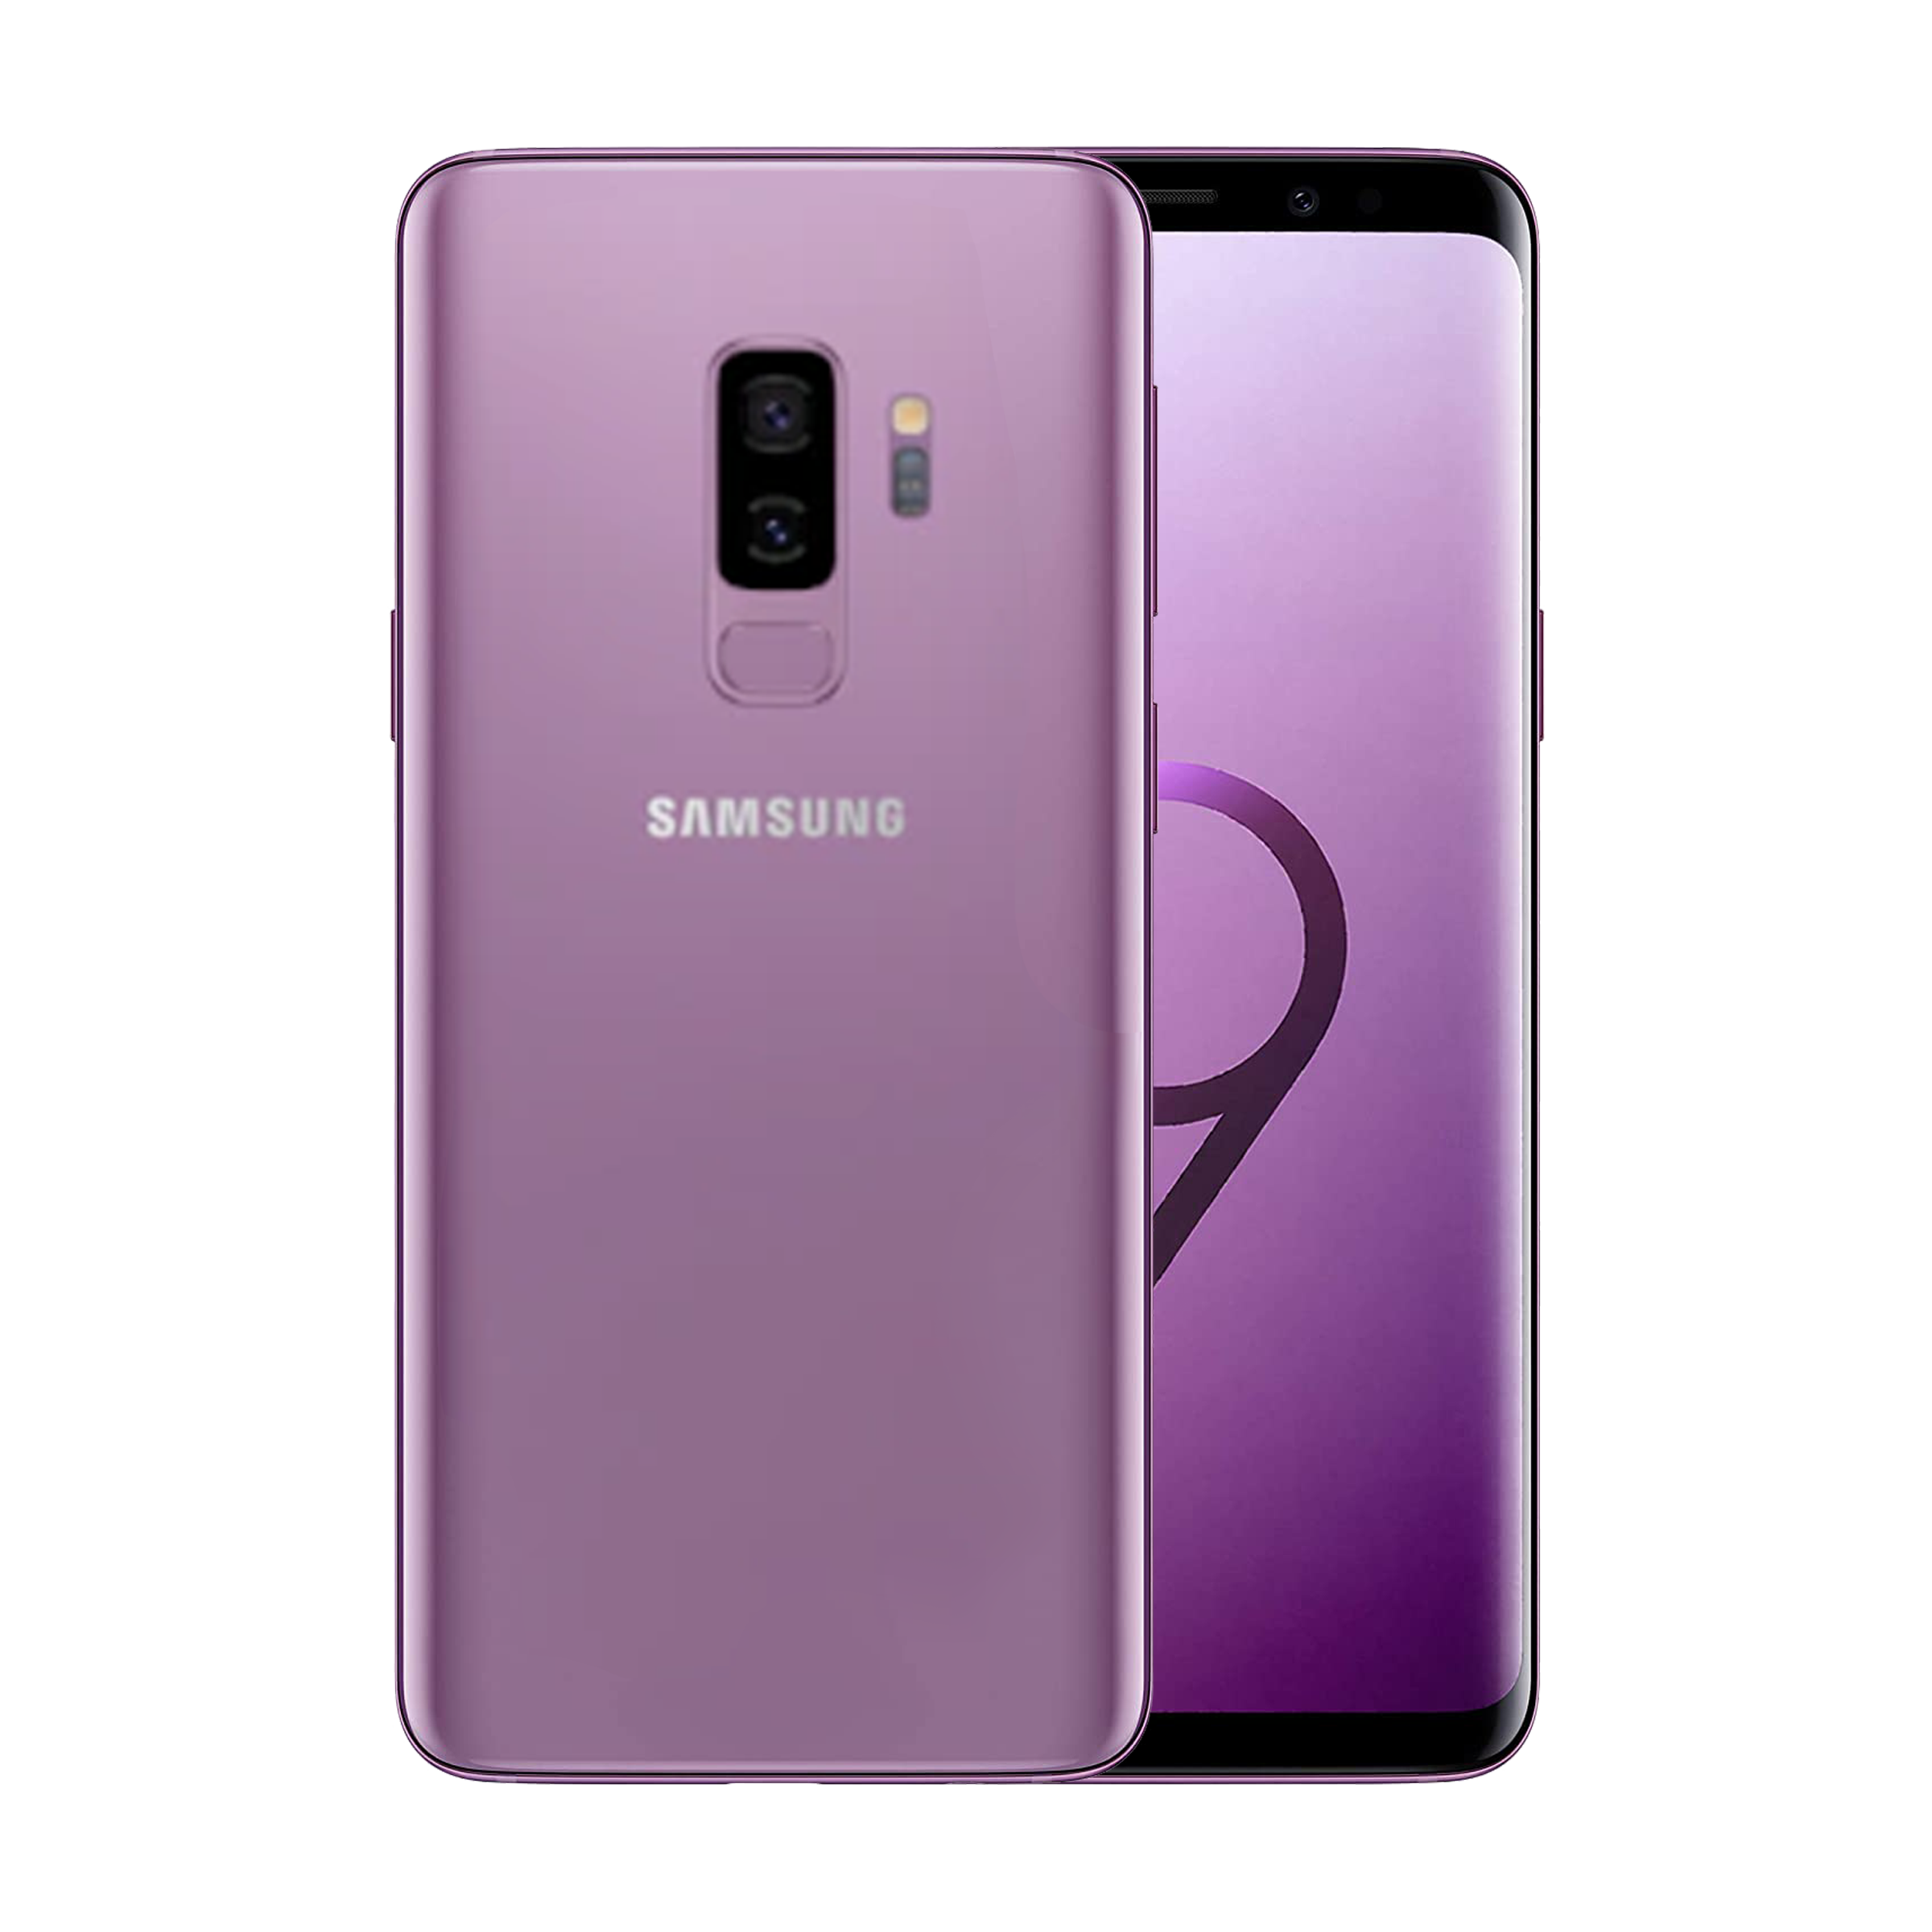 Samsung Galaxy S9 Plus 64GB Purple Good - Unlocked